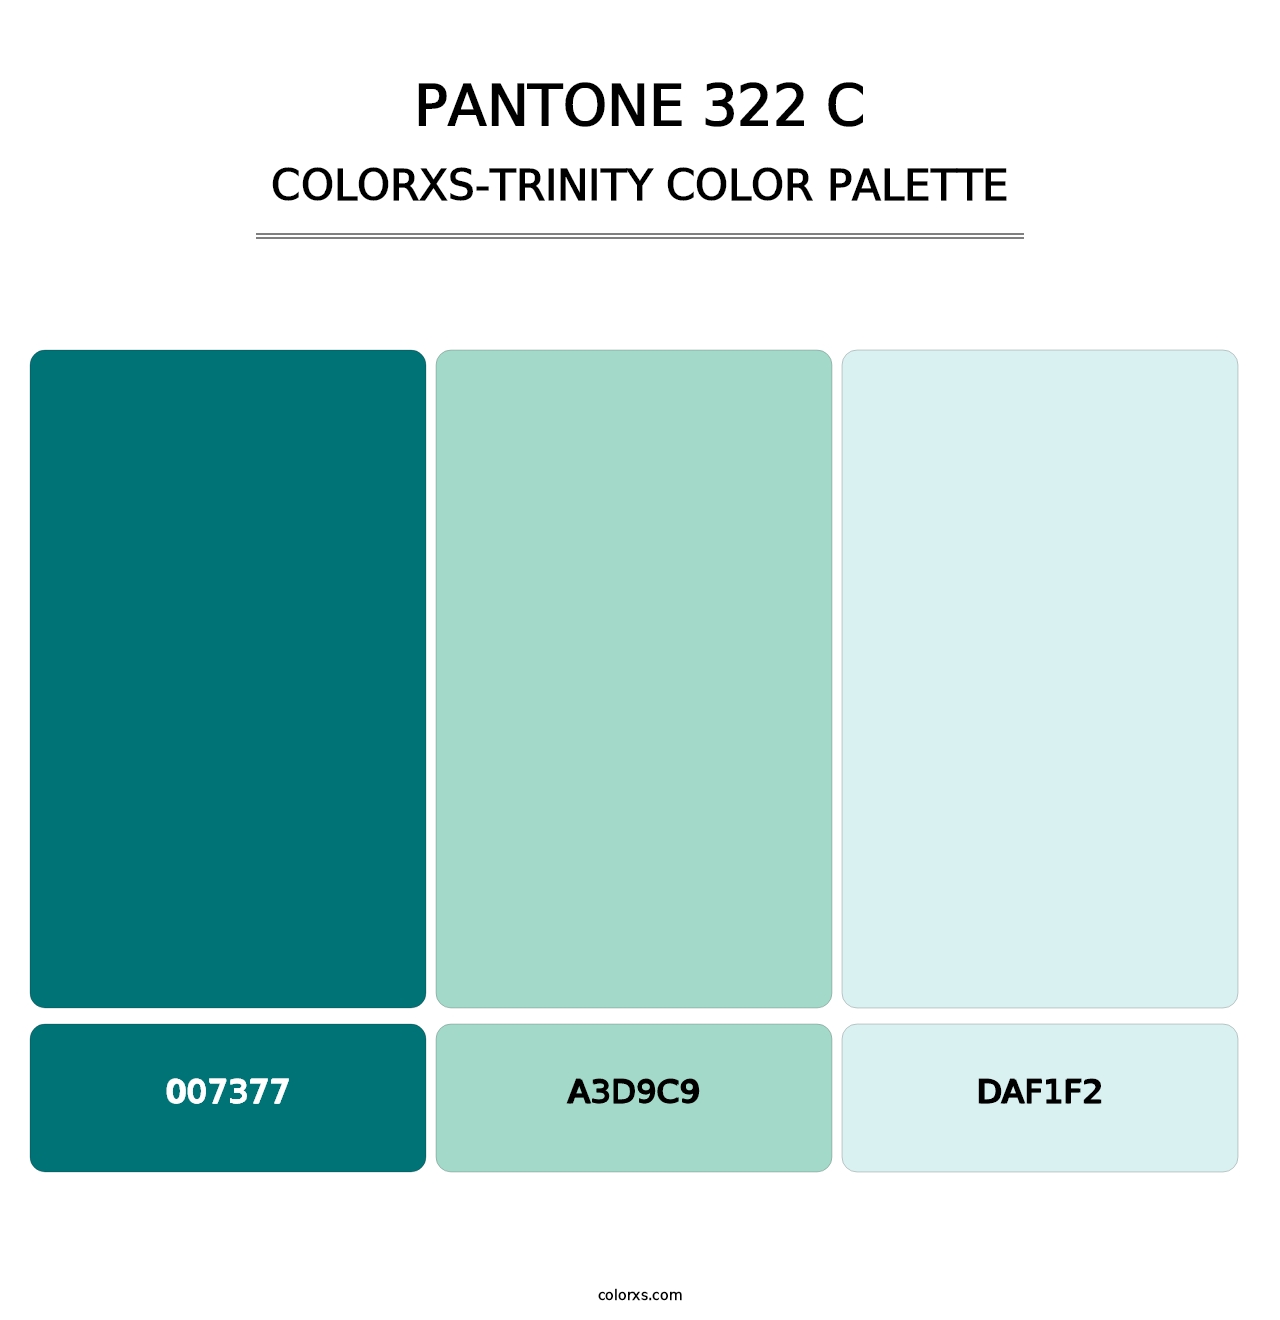 PANTONE 322 C - Colorxs Trinity Palette